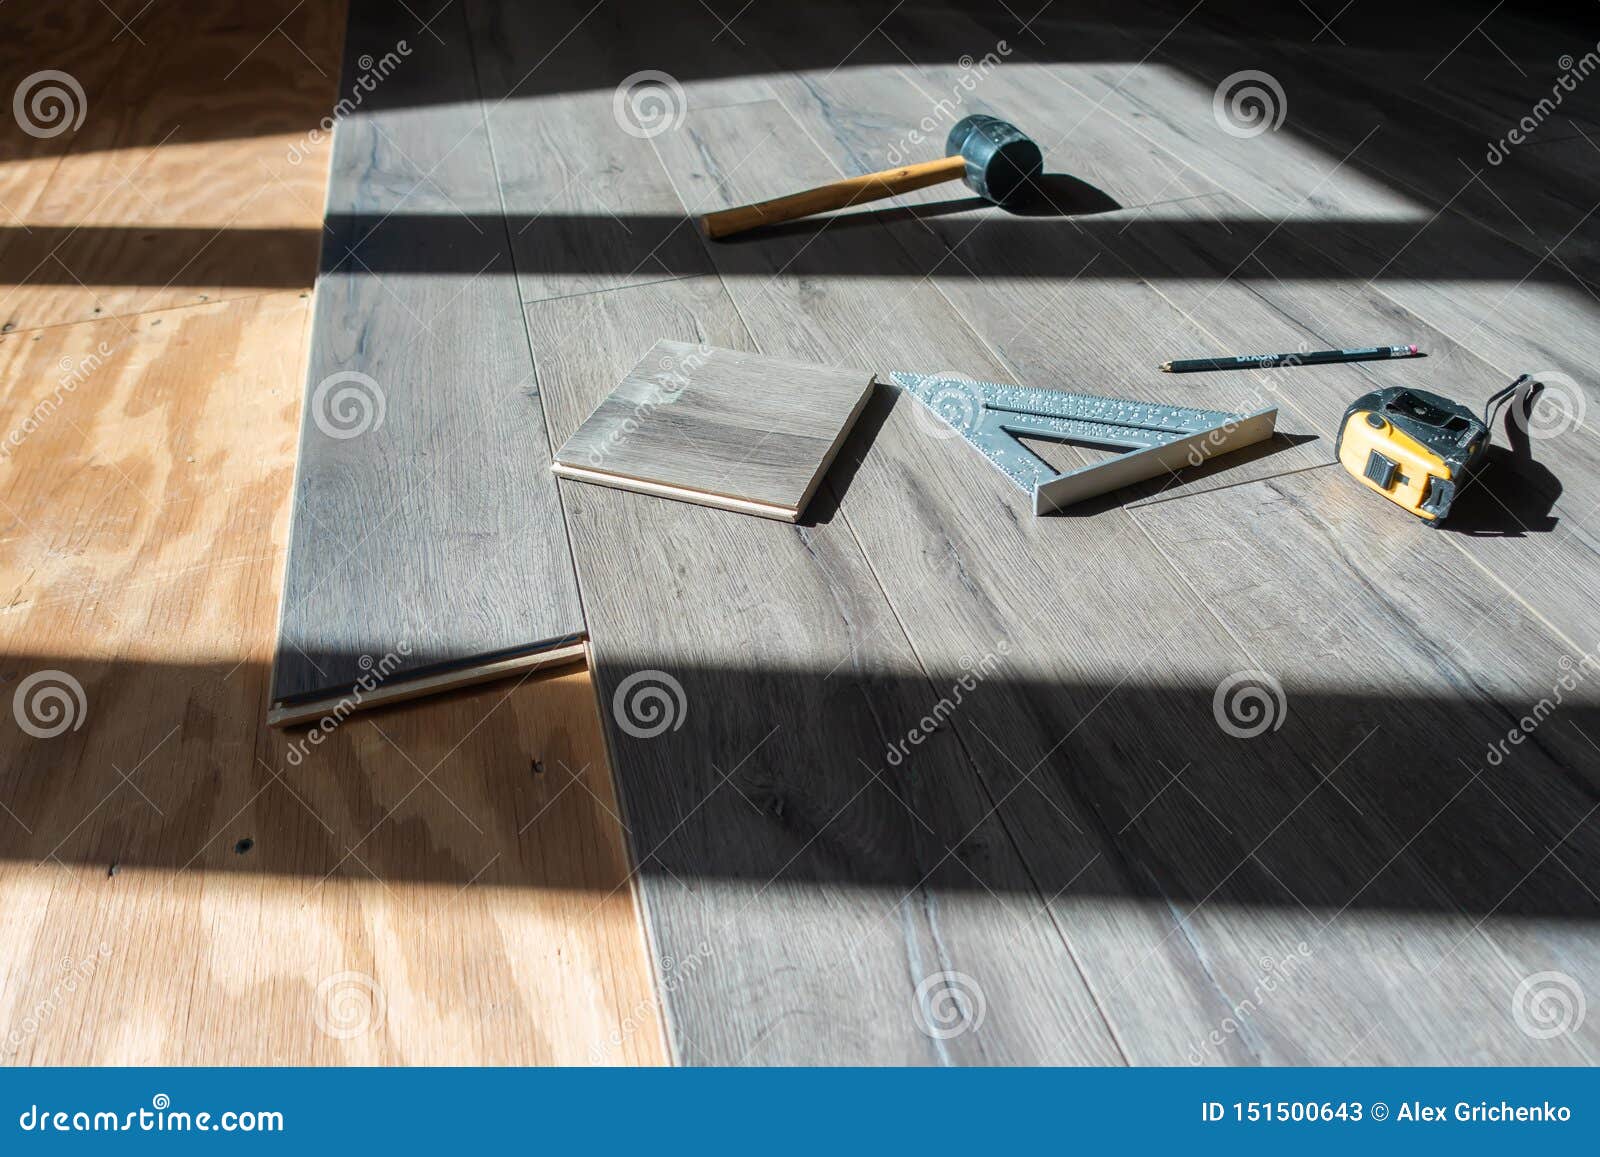 installing engineered laminated wood flooring and tools to use